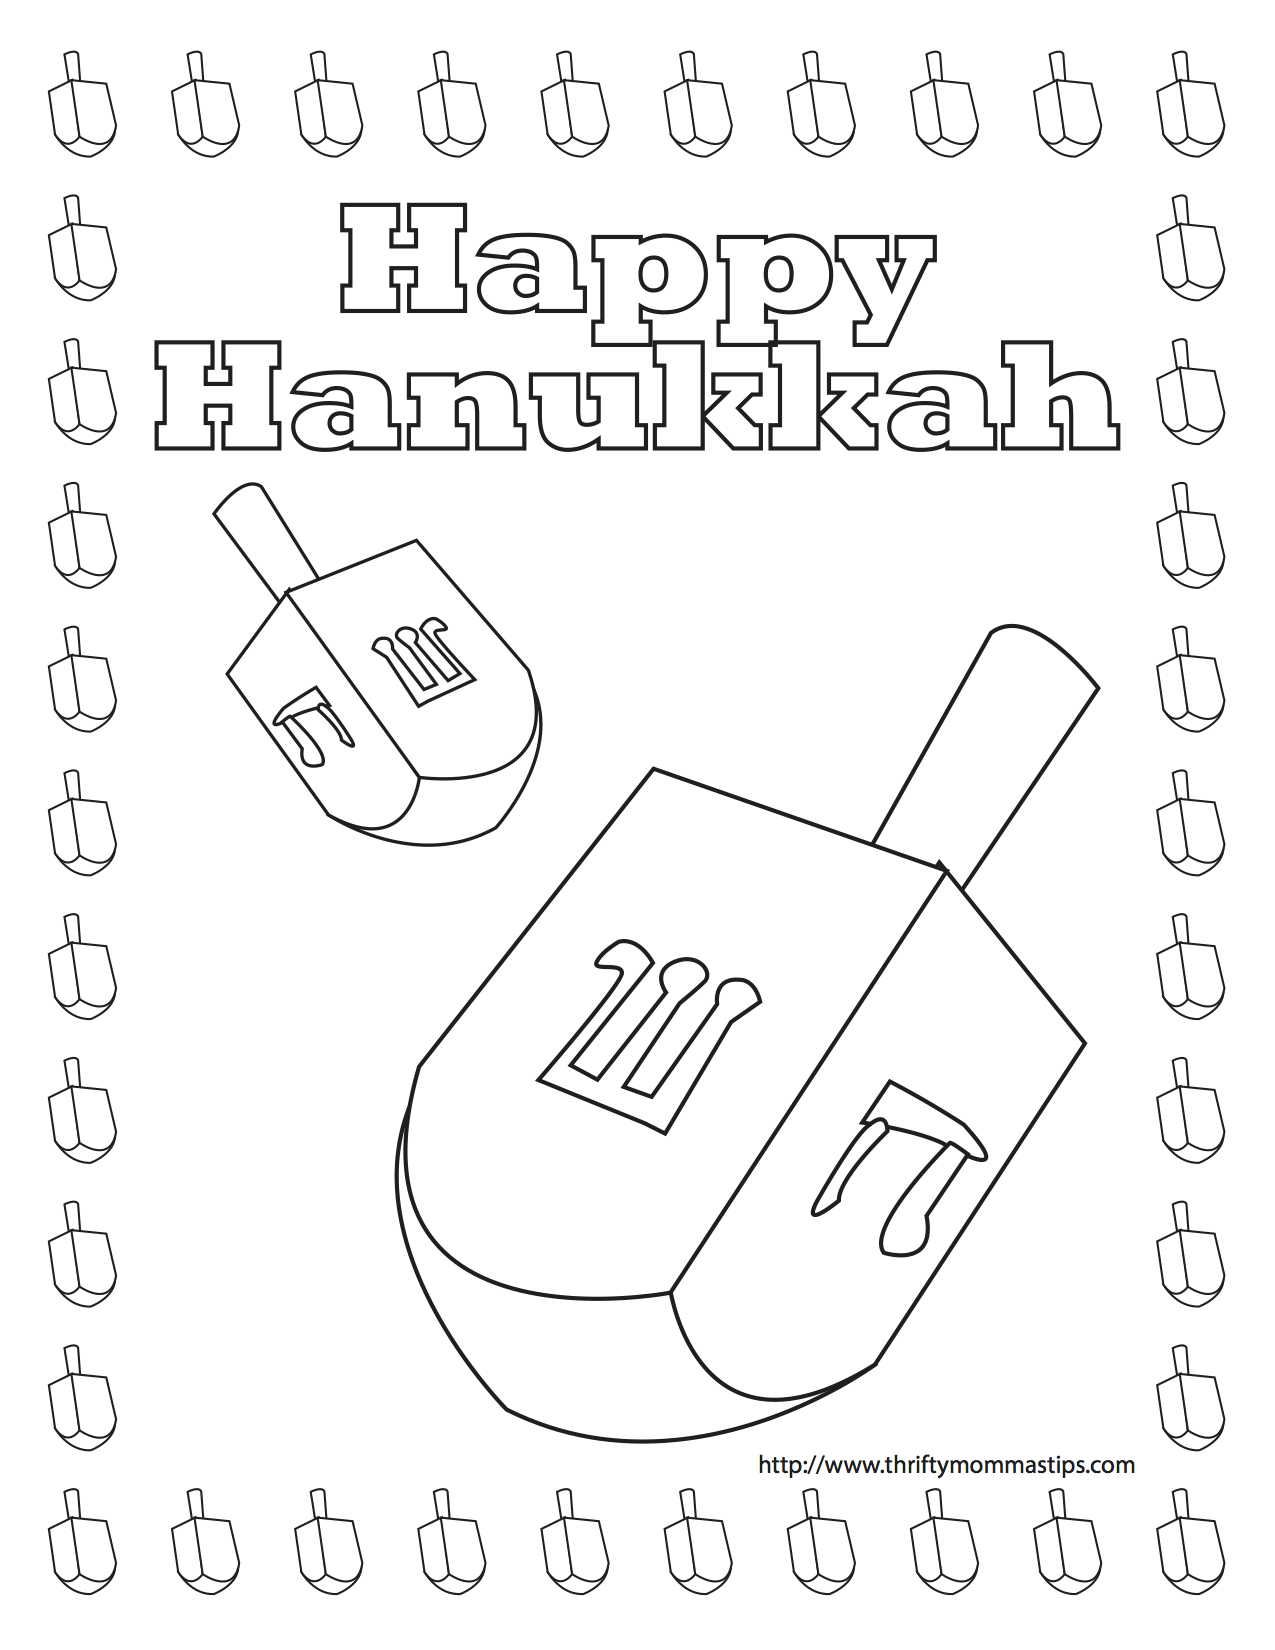 Happy Hanukkah Coloring Pages at GetColorings.com | Free printable